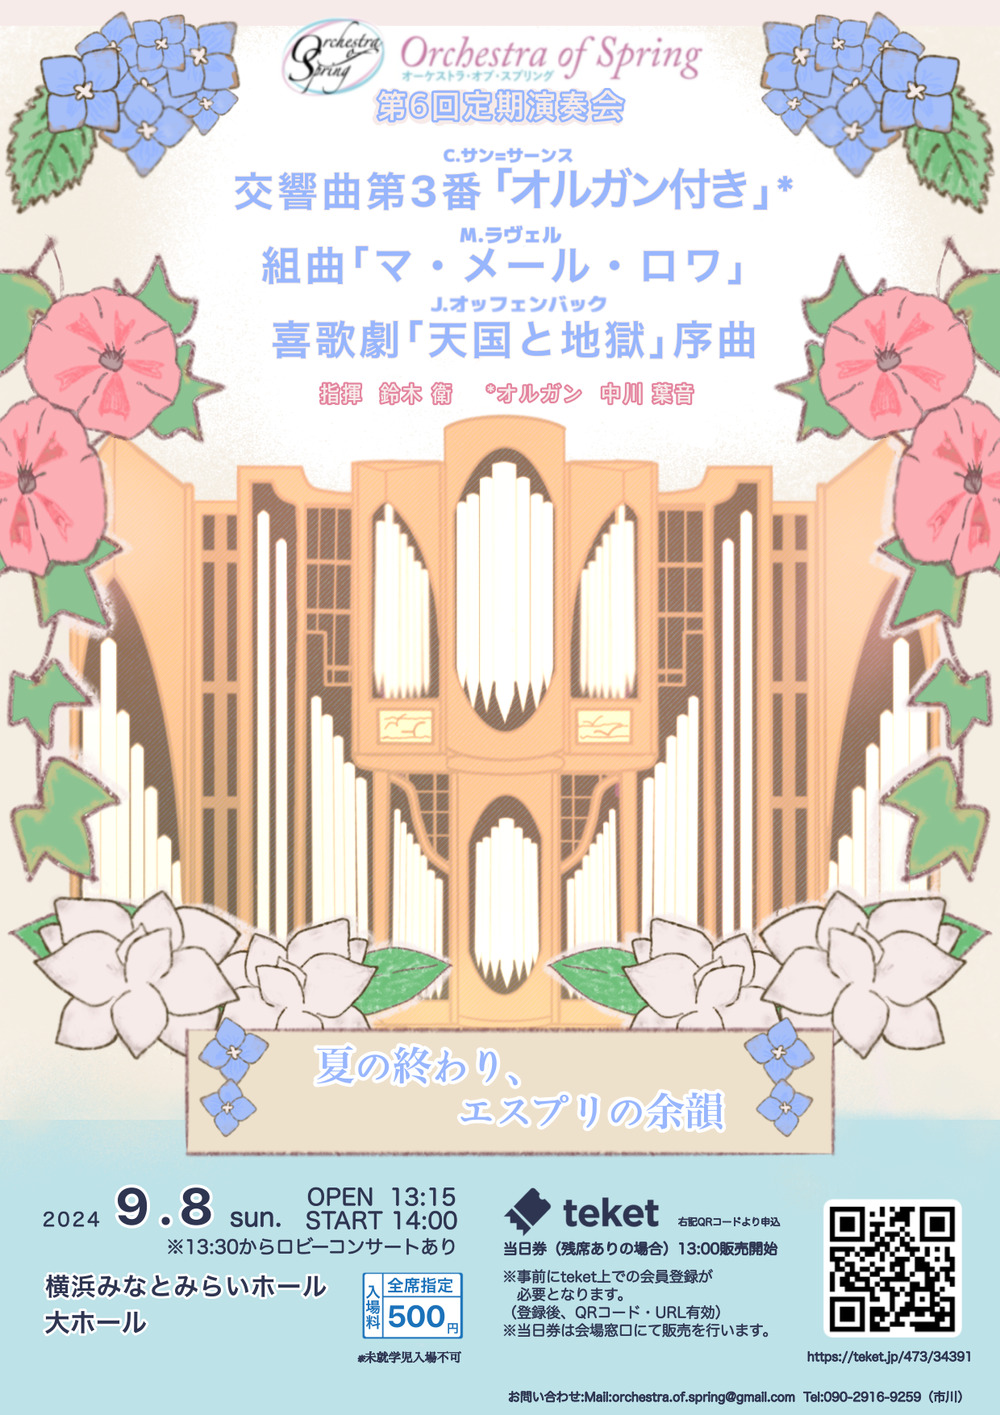 Orchestra of Spring 第6回定期演奏会【Orchestra of Spring】 | 横浜みなとみらいホール 大ホール